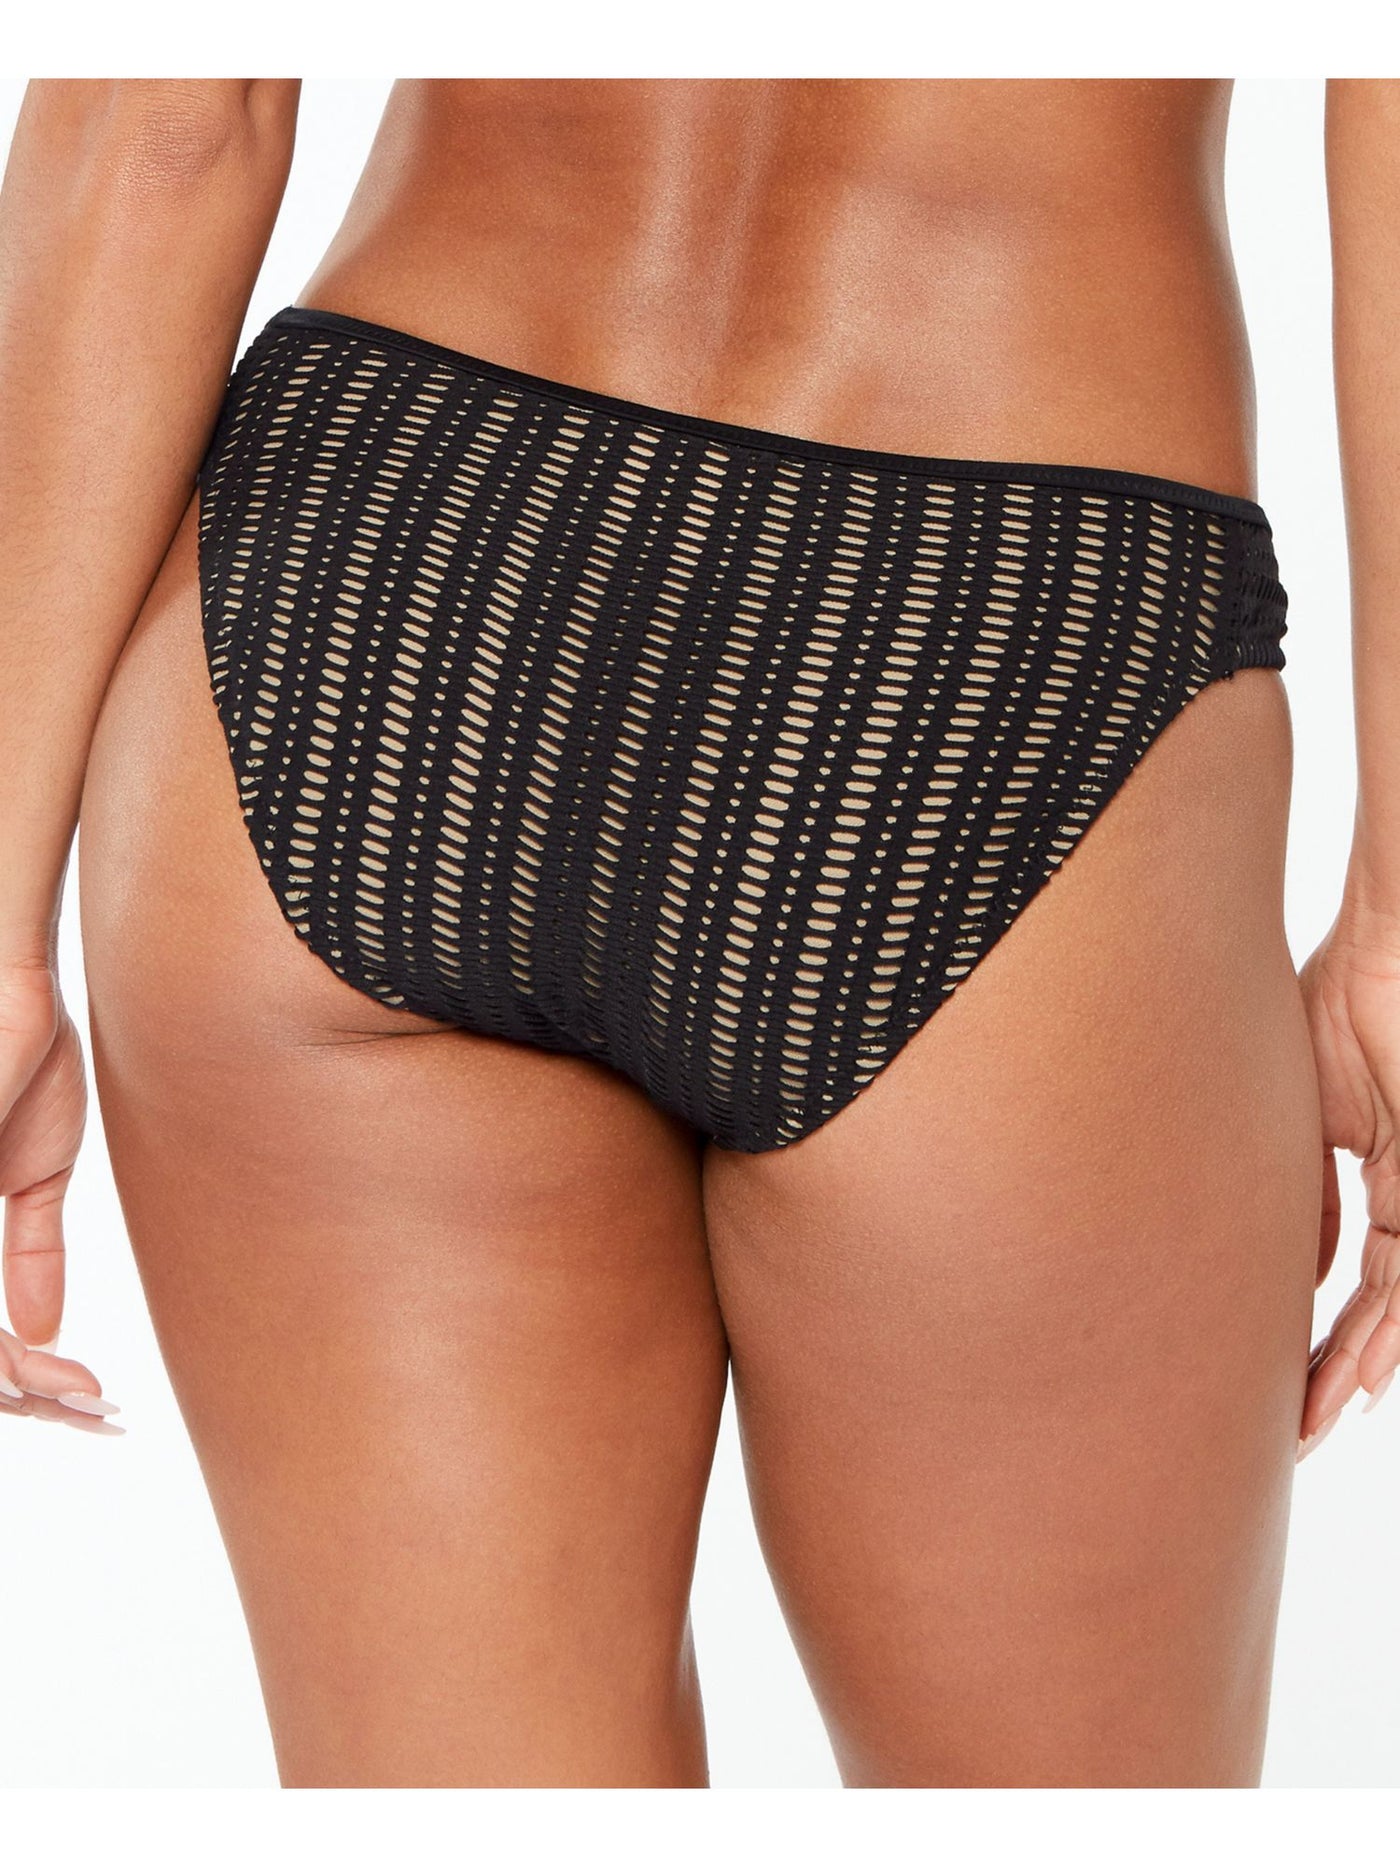 BAR III Women's Black Stretch Lined Full Coverage Crochet Hipster Swimsuit Bottom L